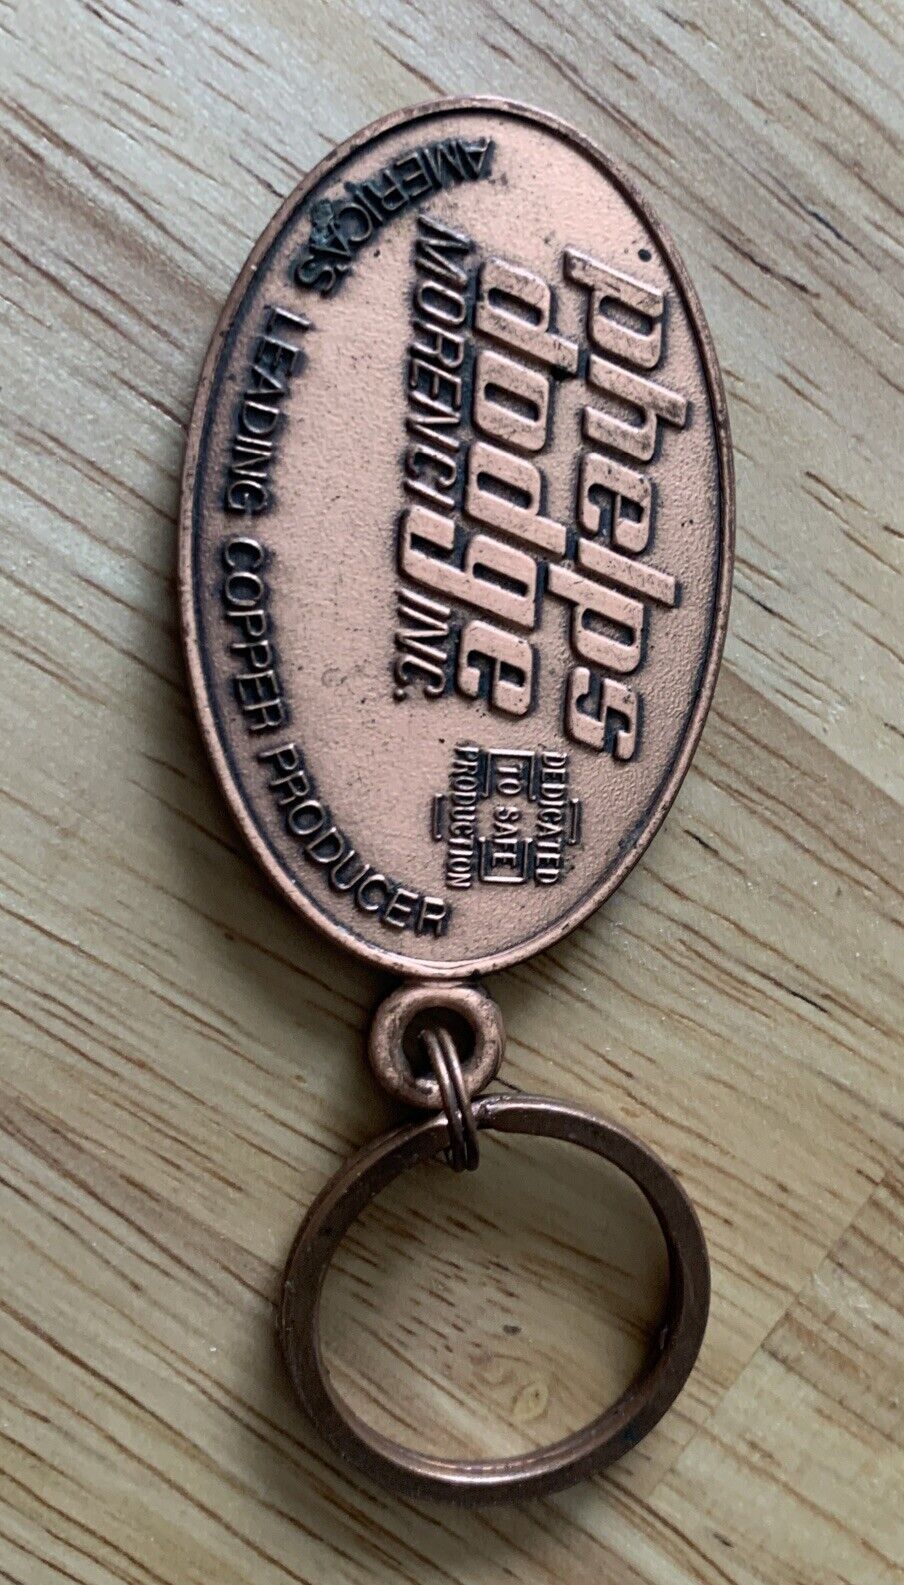 Phelps Dodge Morenci Inc. Copper Key Ring Fob